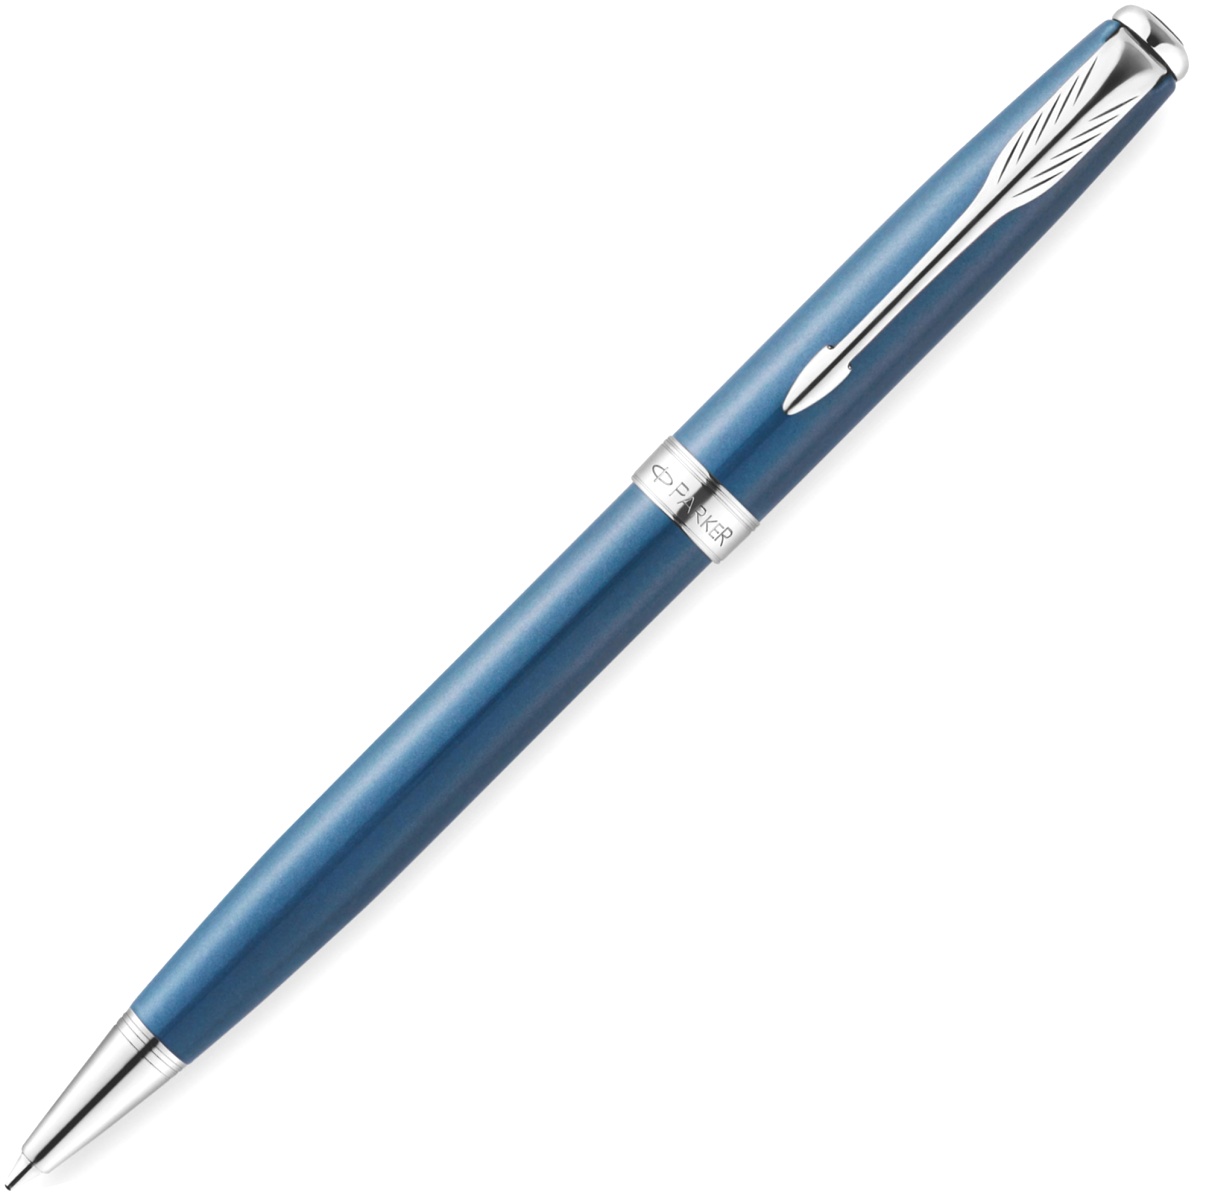 Шариковая ручка Parker Sonnet K533 Special Edition 2015, Secret Blue Shell